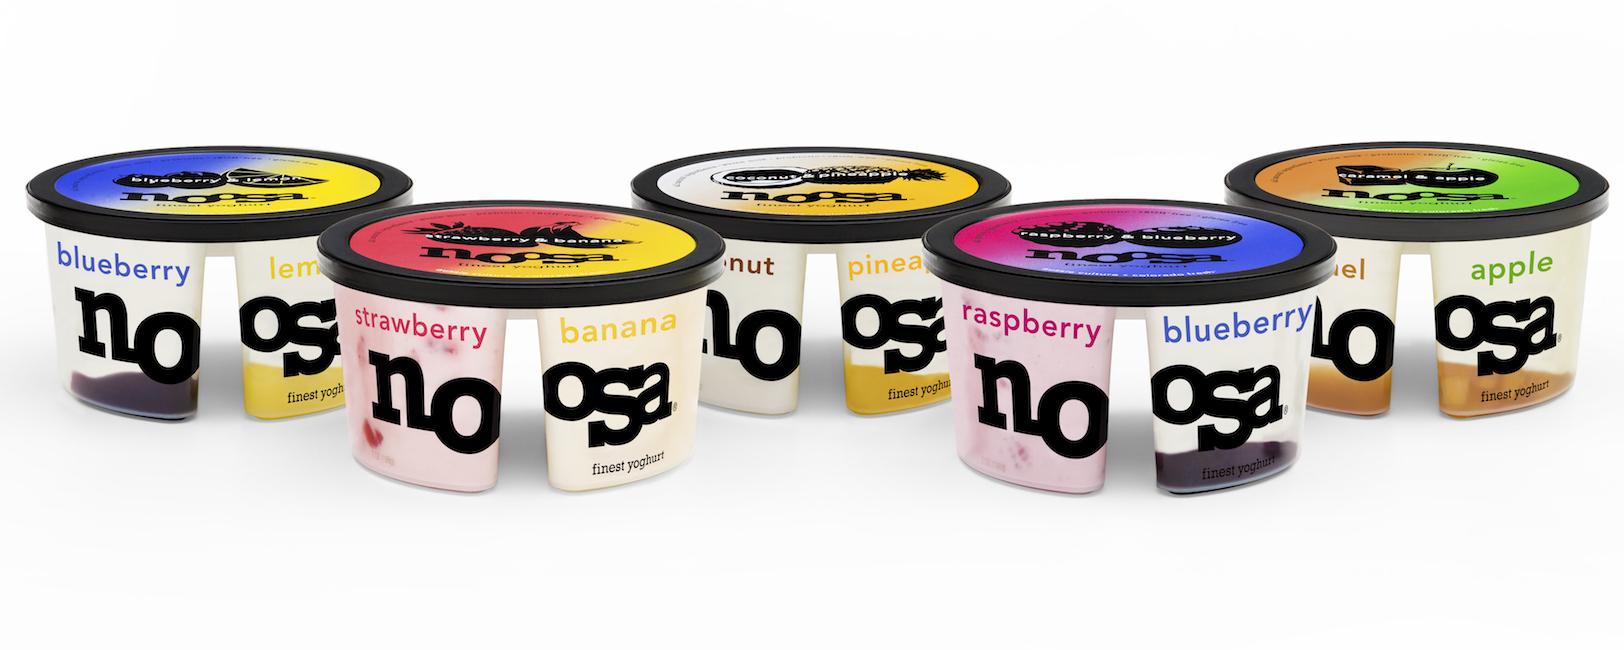 new Noosa yoghurt flavors